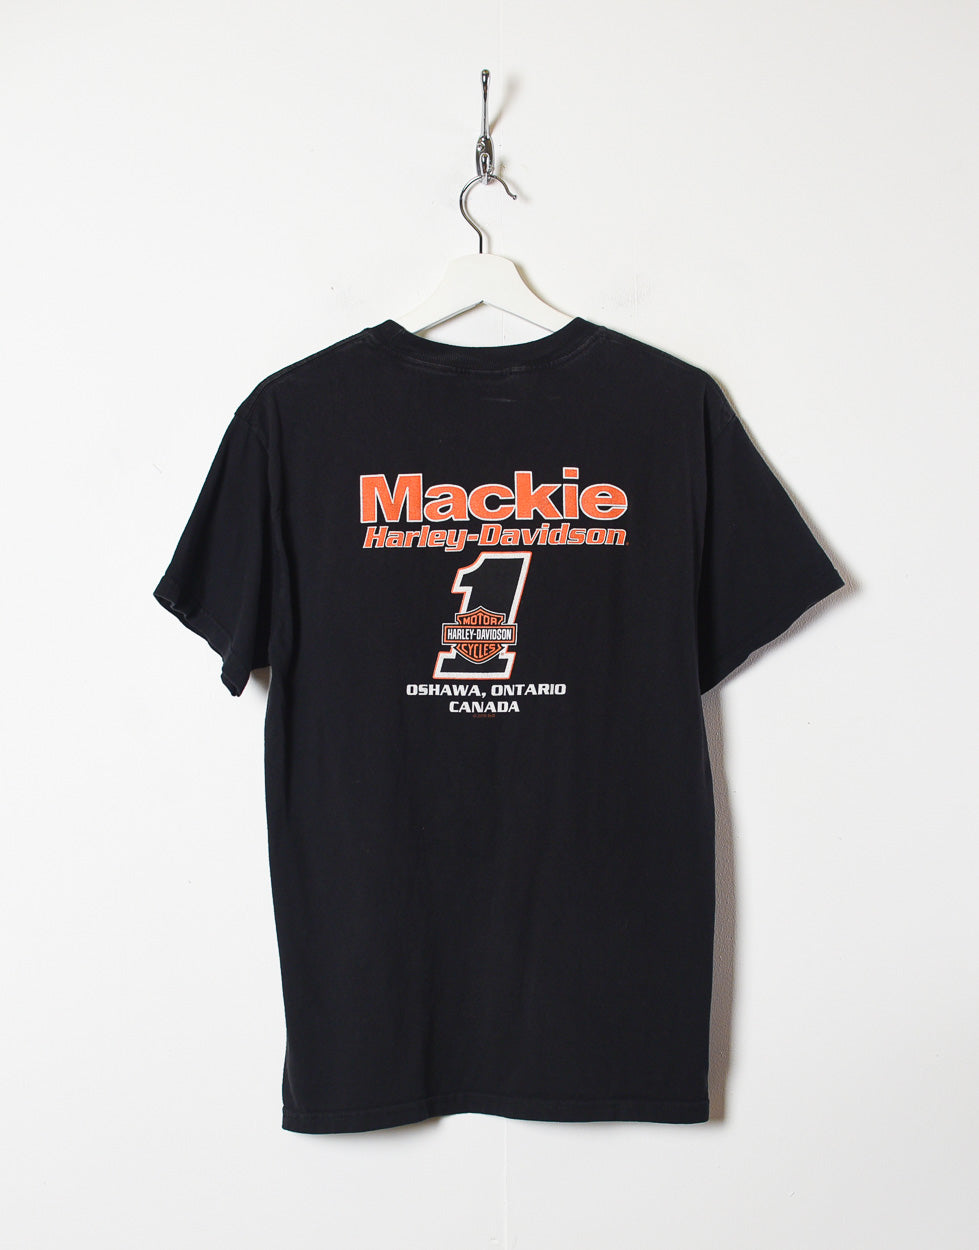 Black Harley Davidson Mackie Graphic T-Shirt - Small